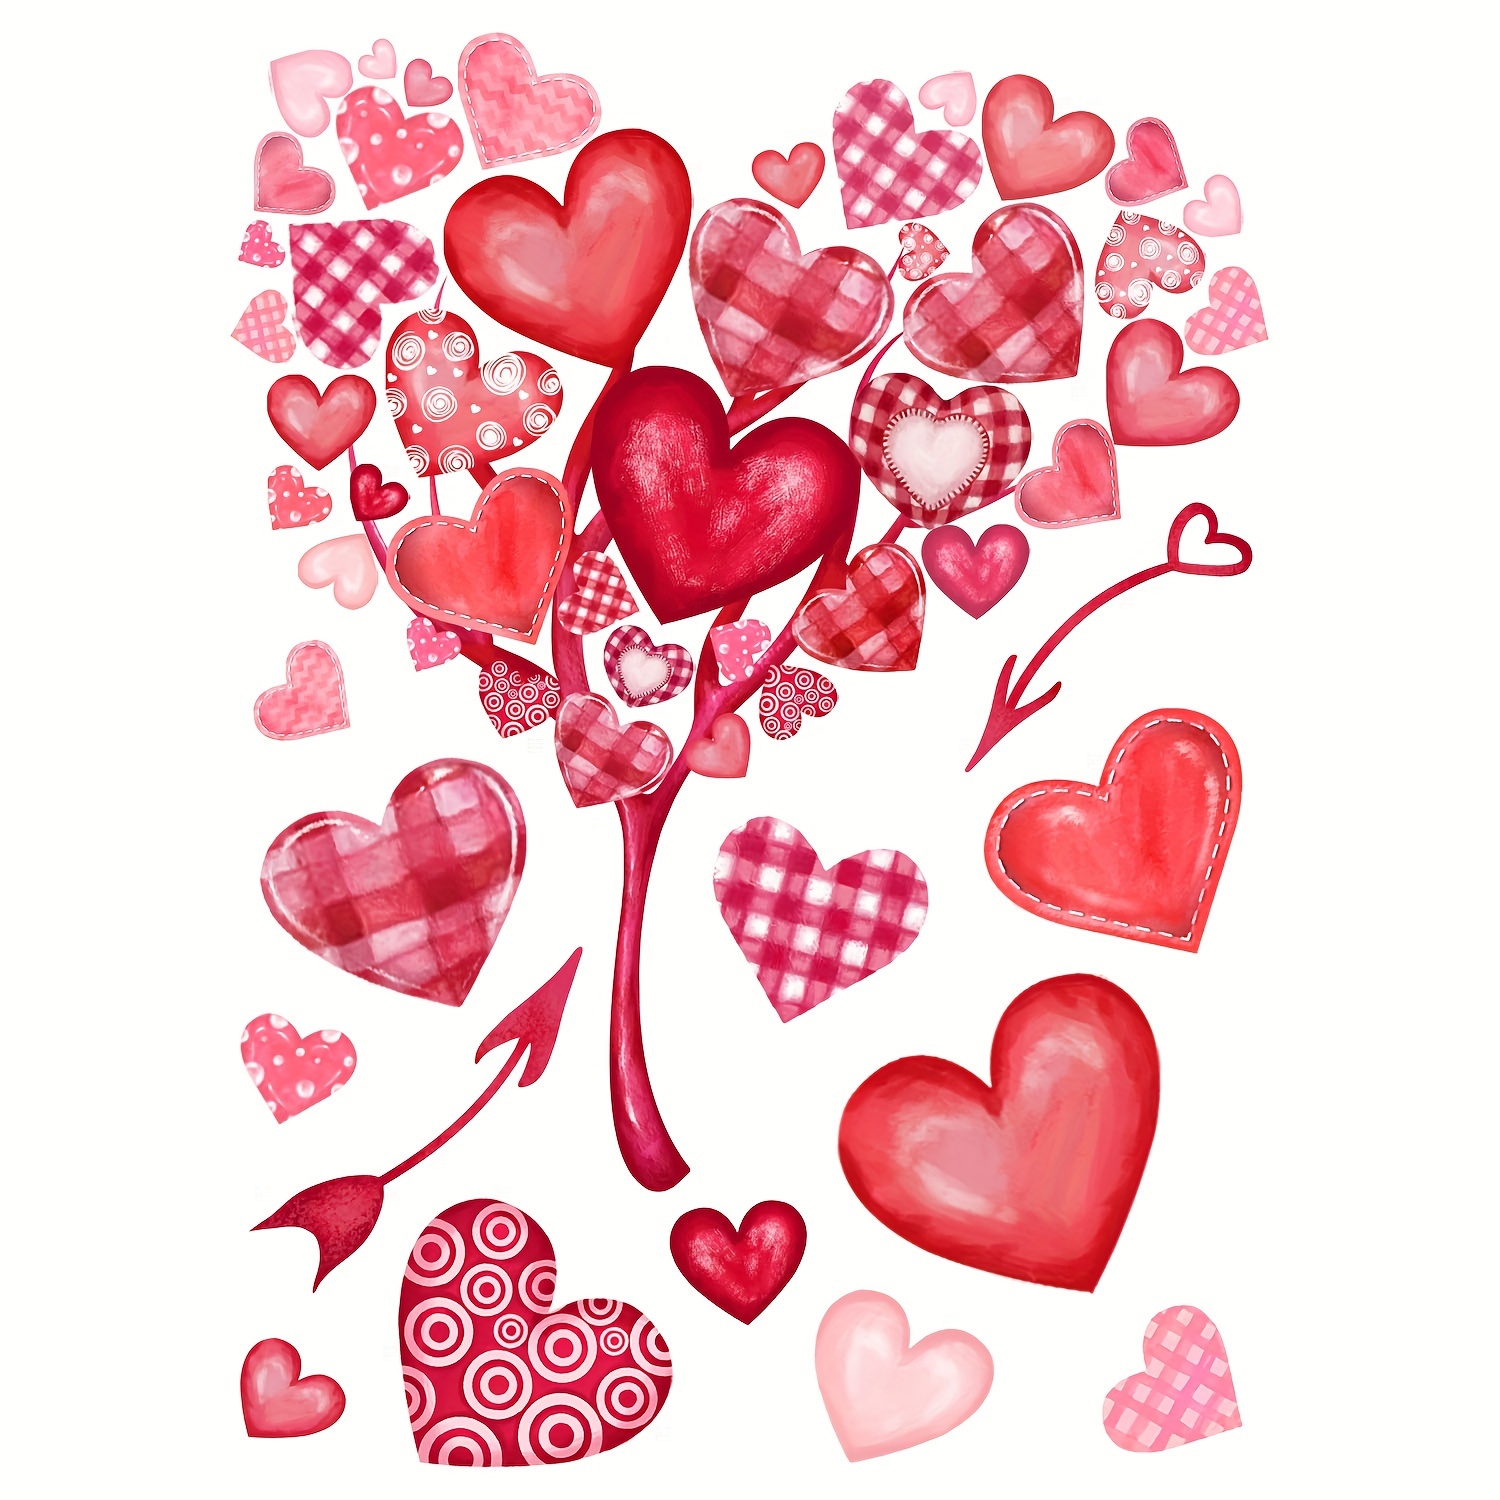 Stickers Valentine's Day, Heart, Cake. Graphic by vitaminka26